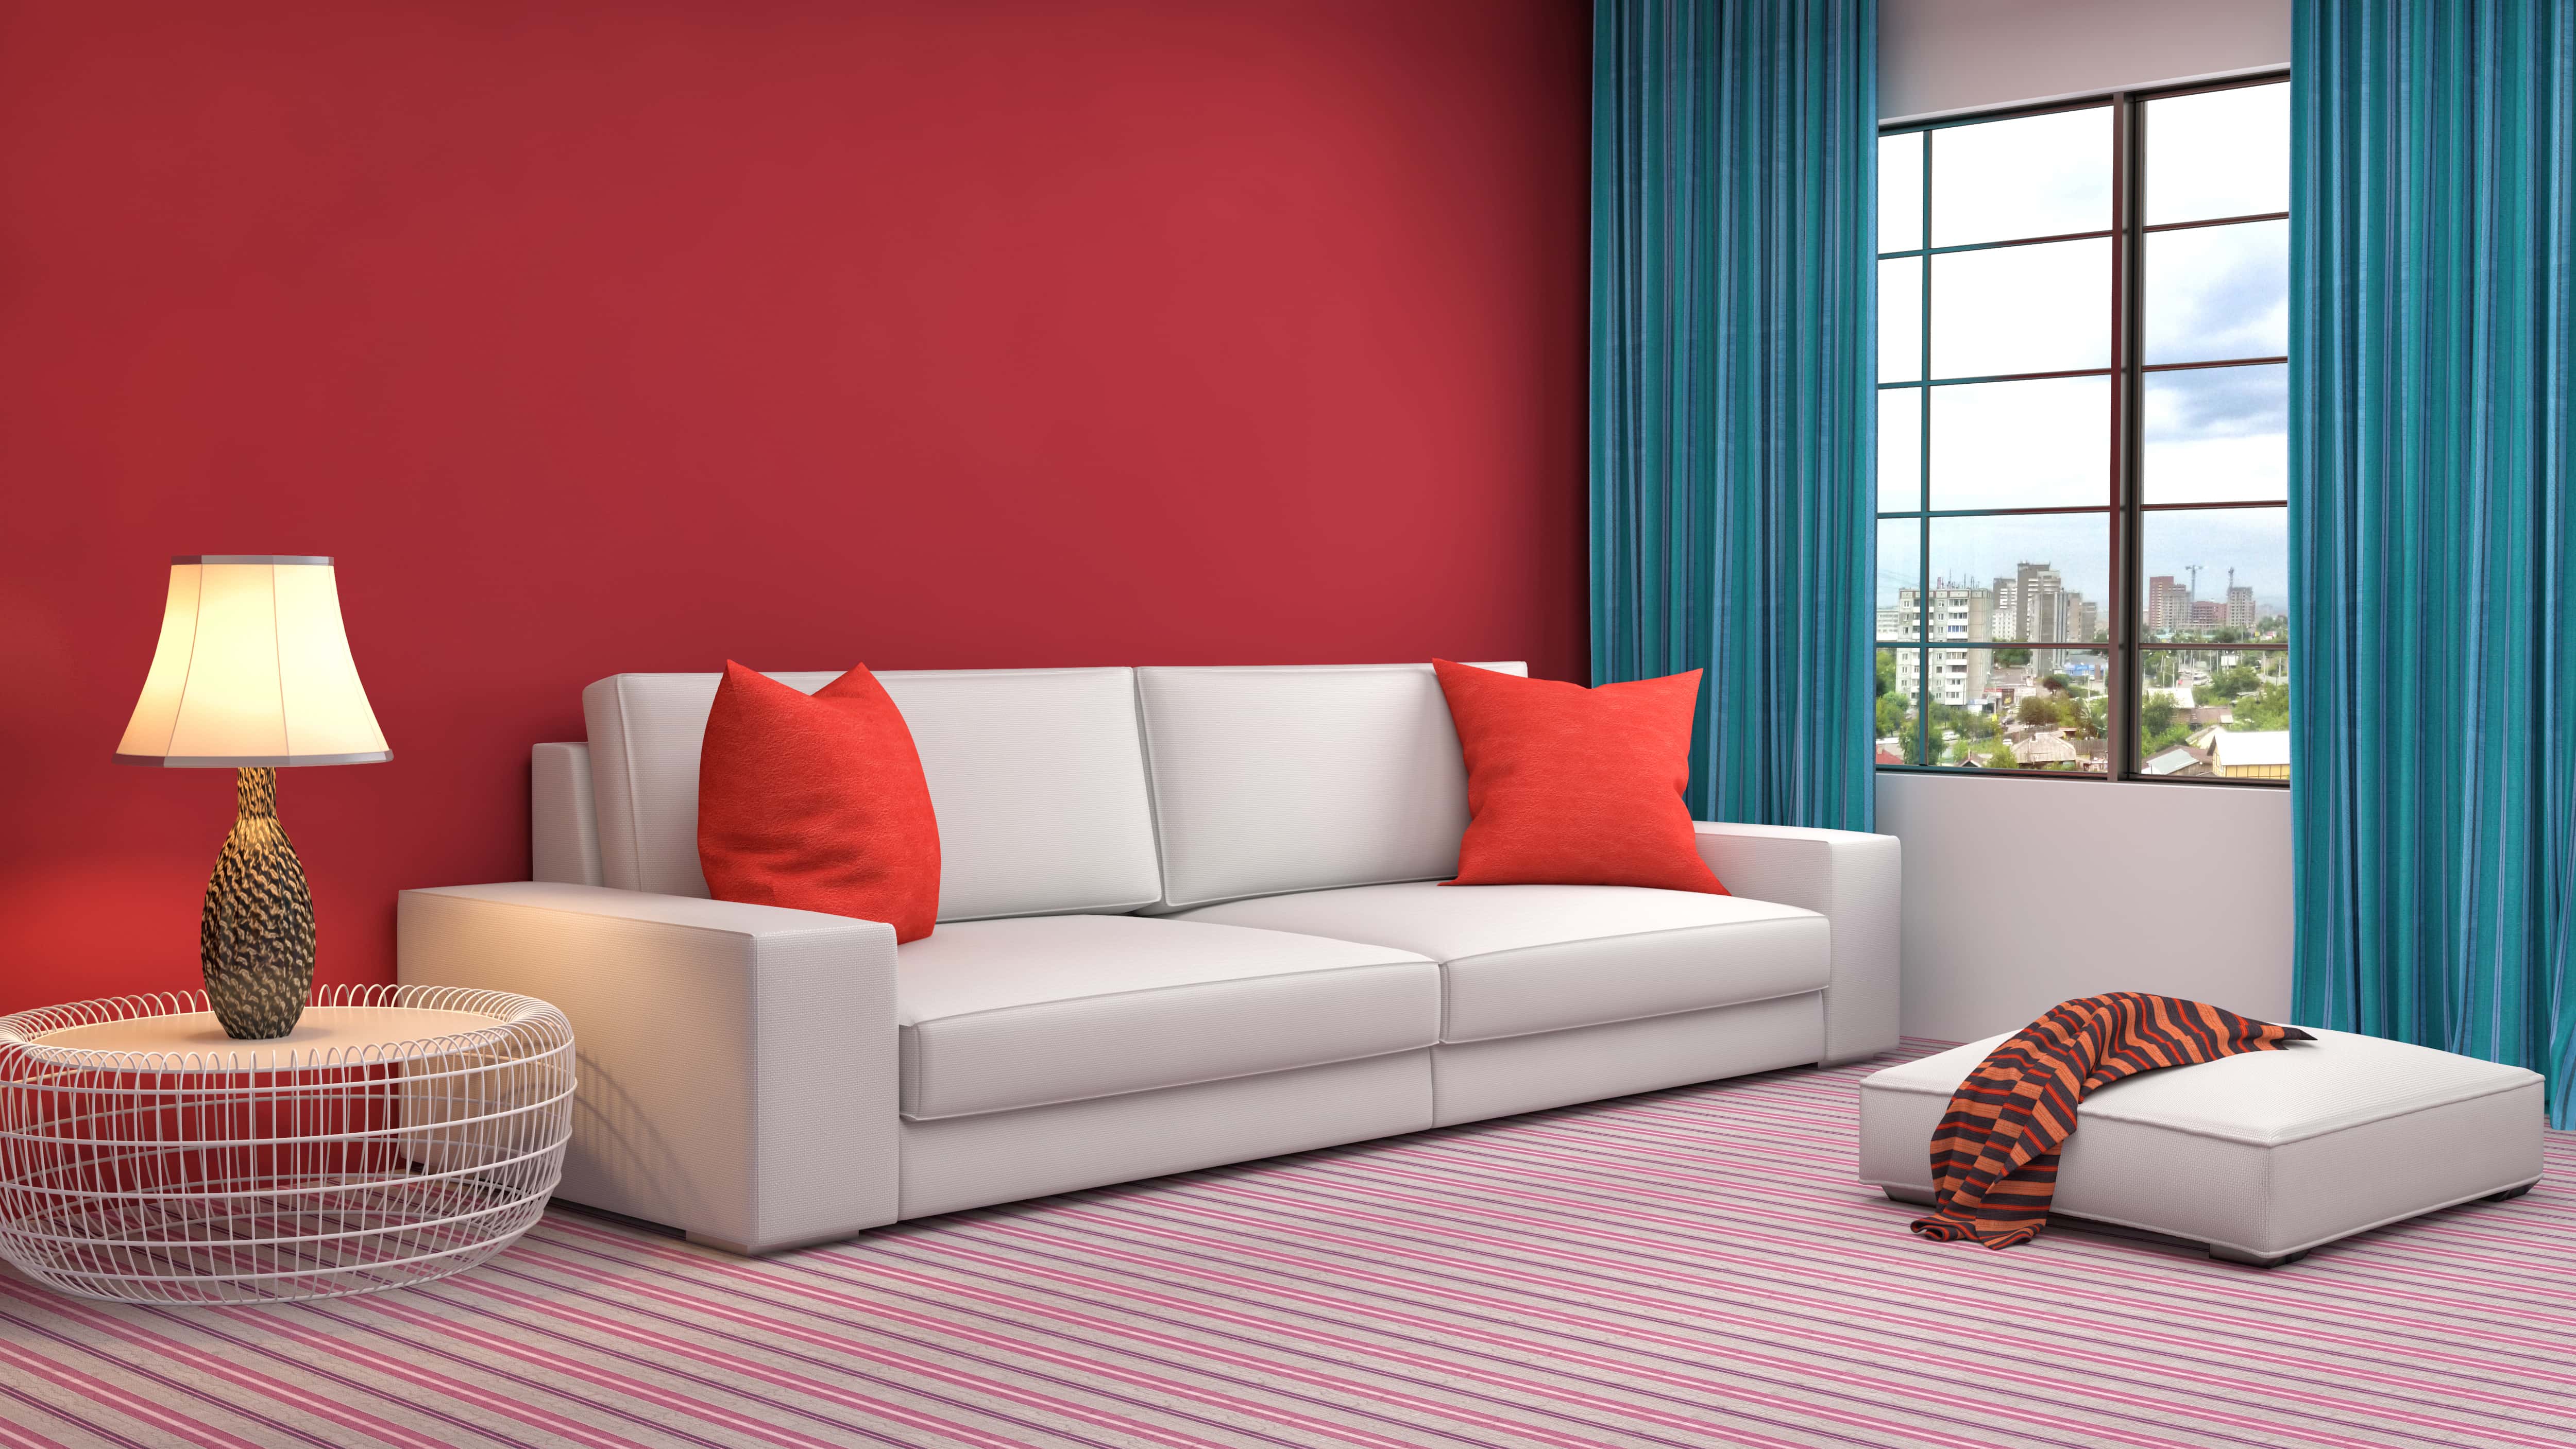 Denim Curtains design for living room